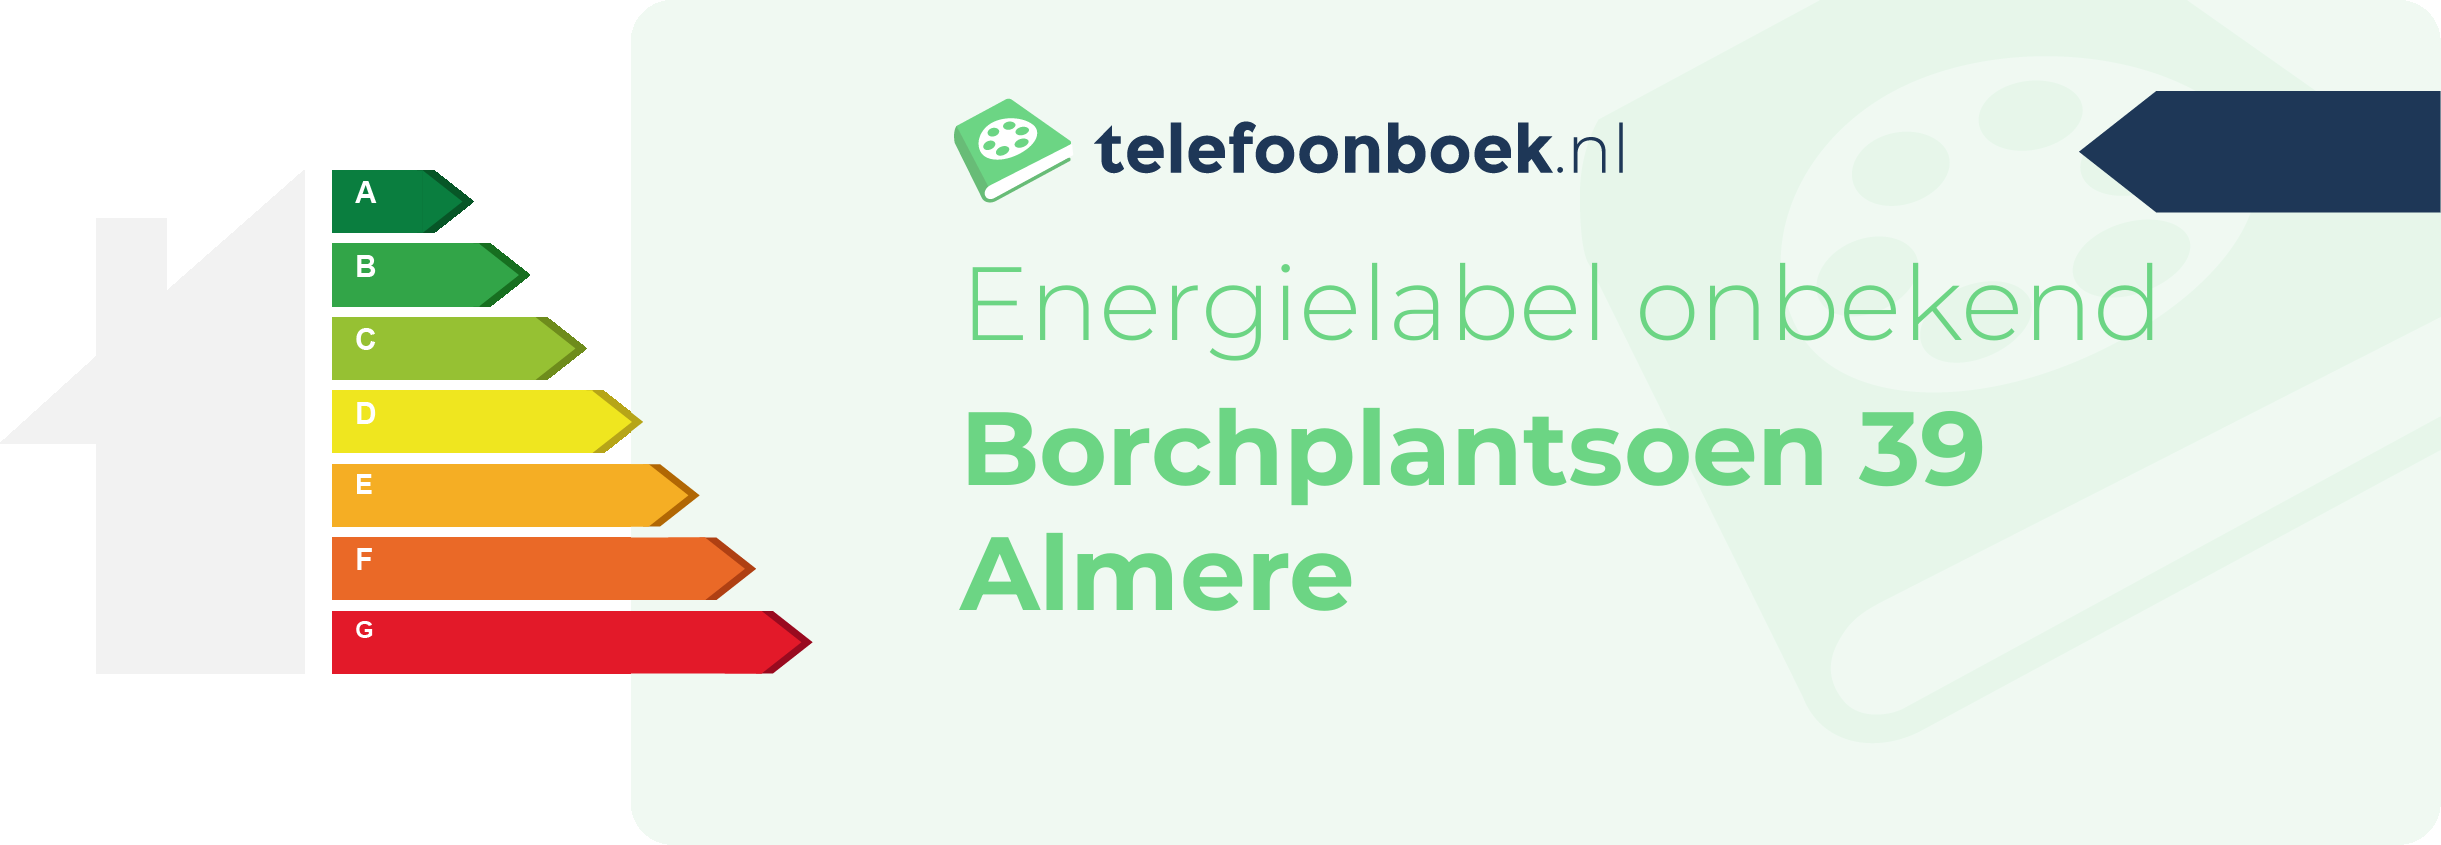 Energielabel Borchplantsoen 39 Almere